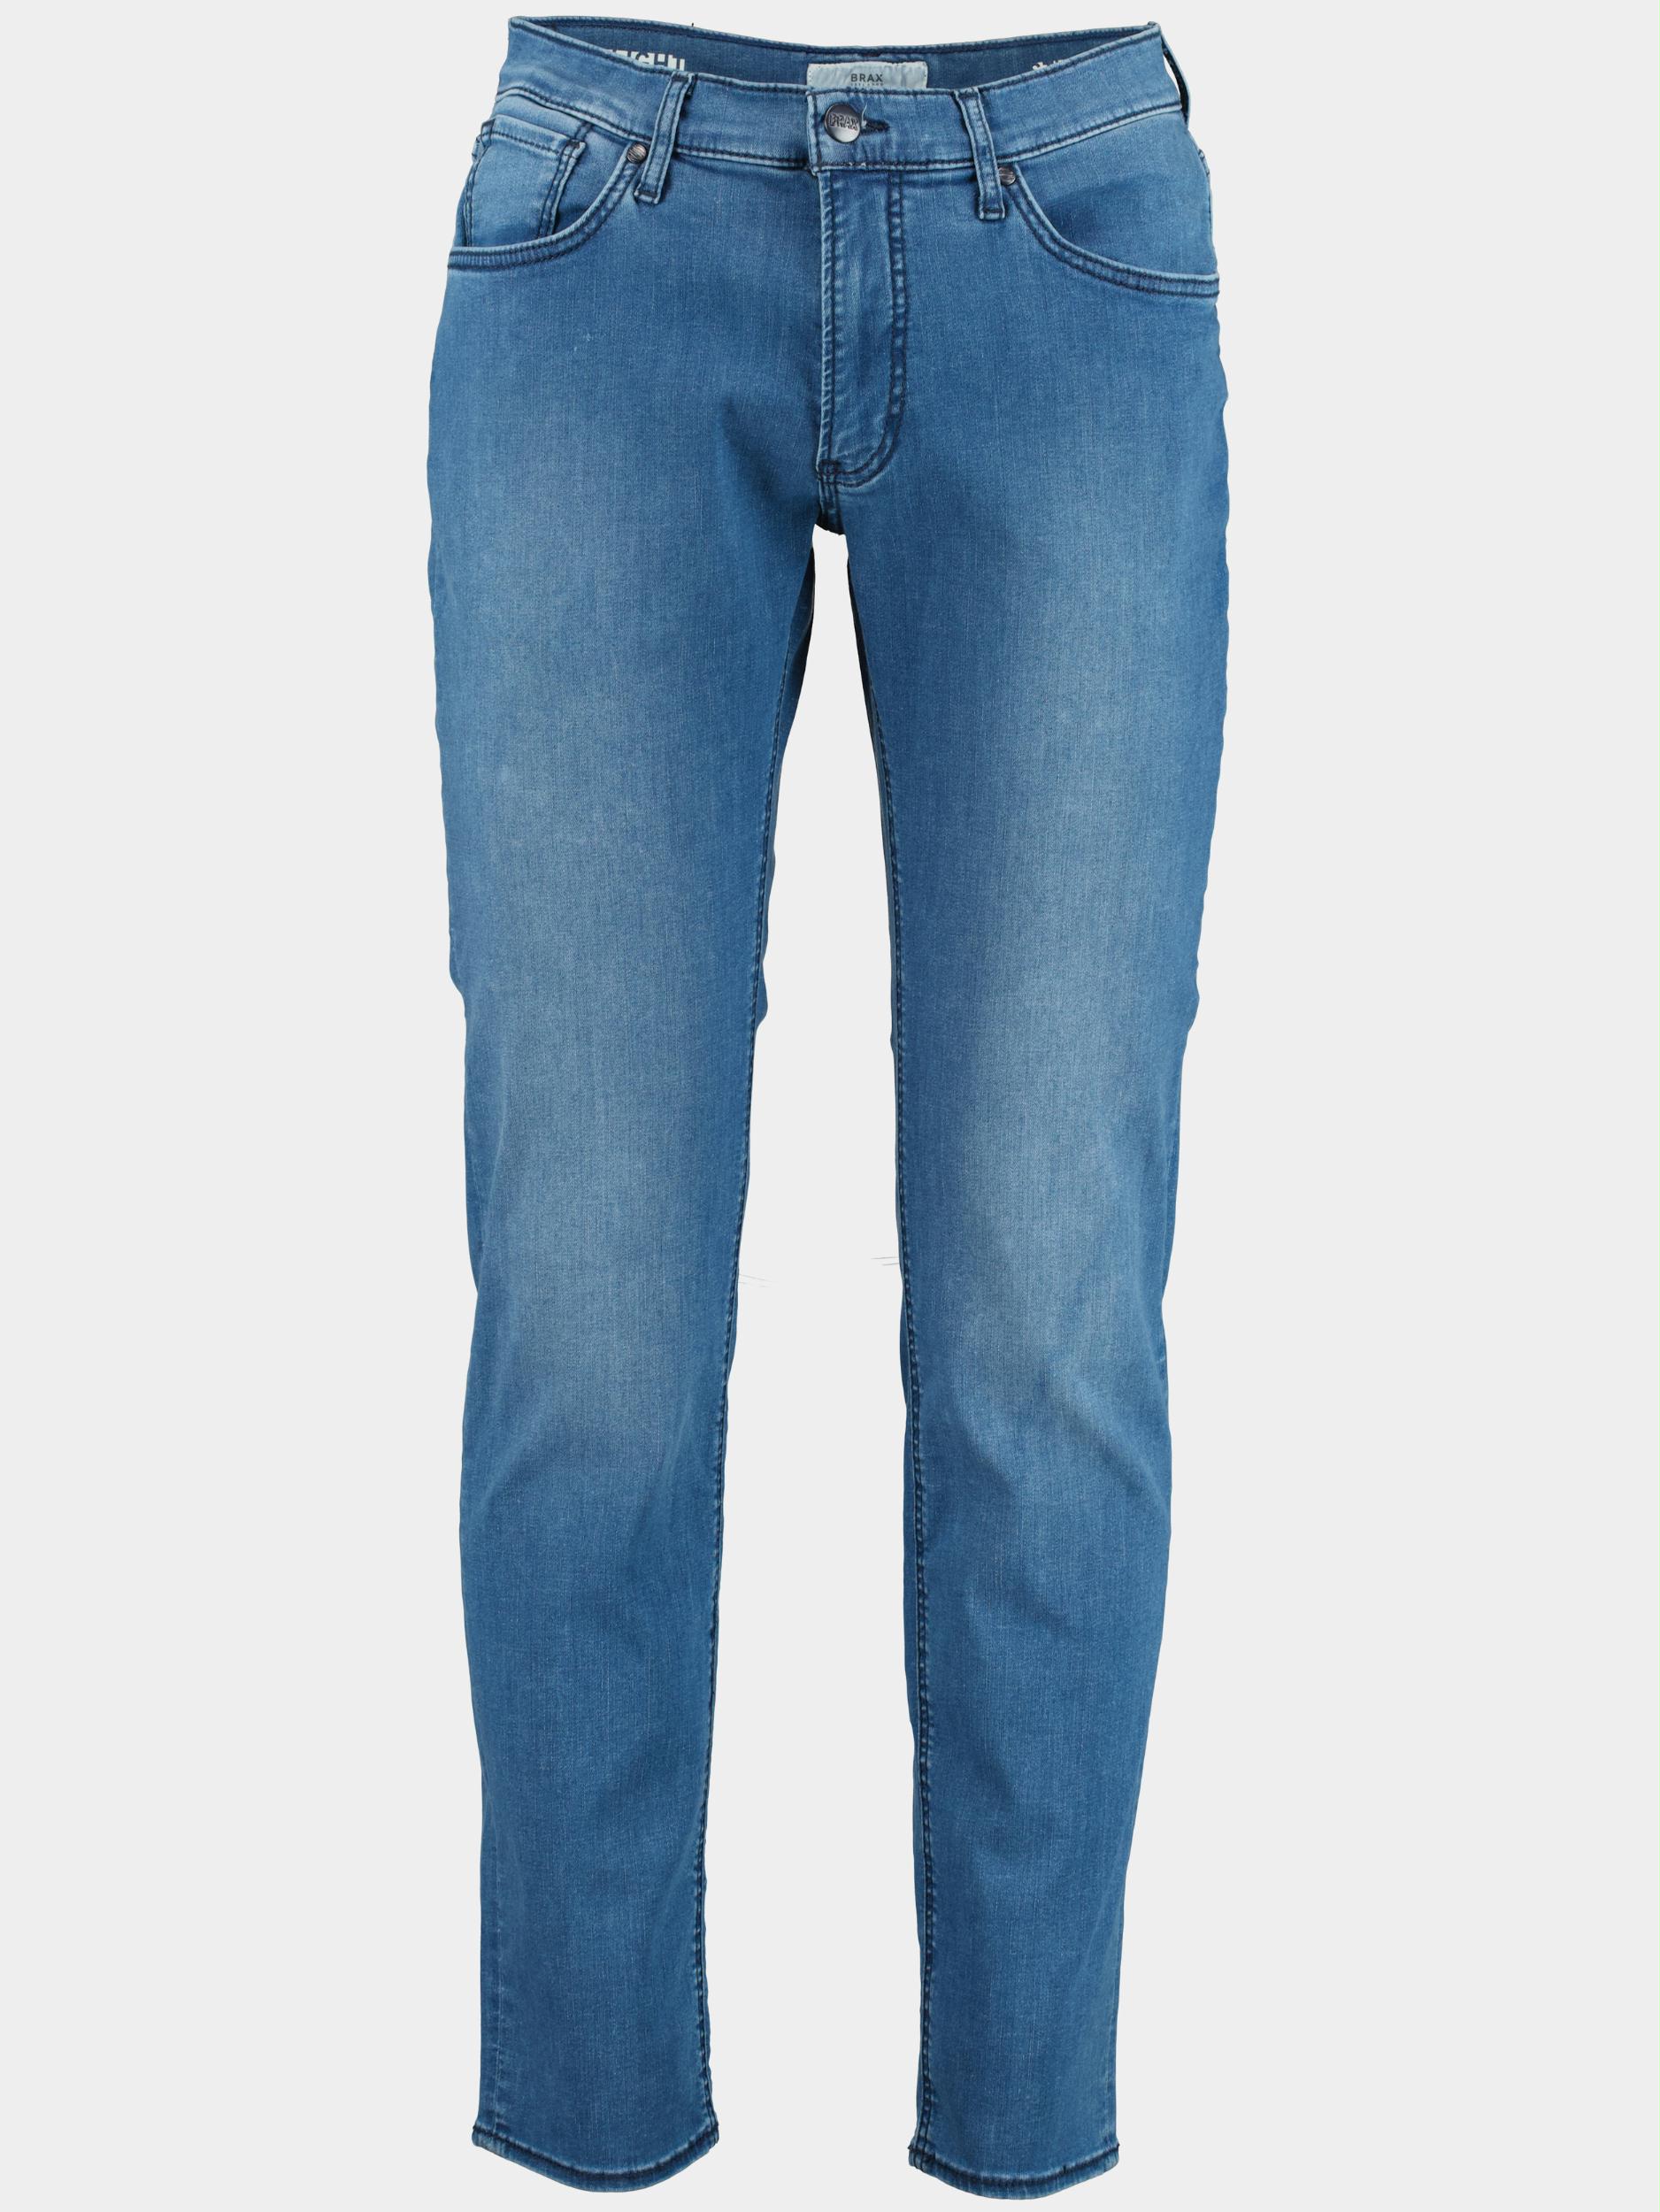 nakoming Discrepantie Lam Heren jeans online bestellen - Bosmenshop.nl